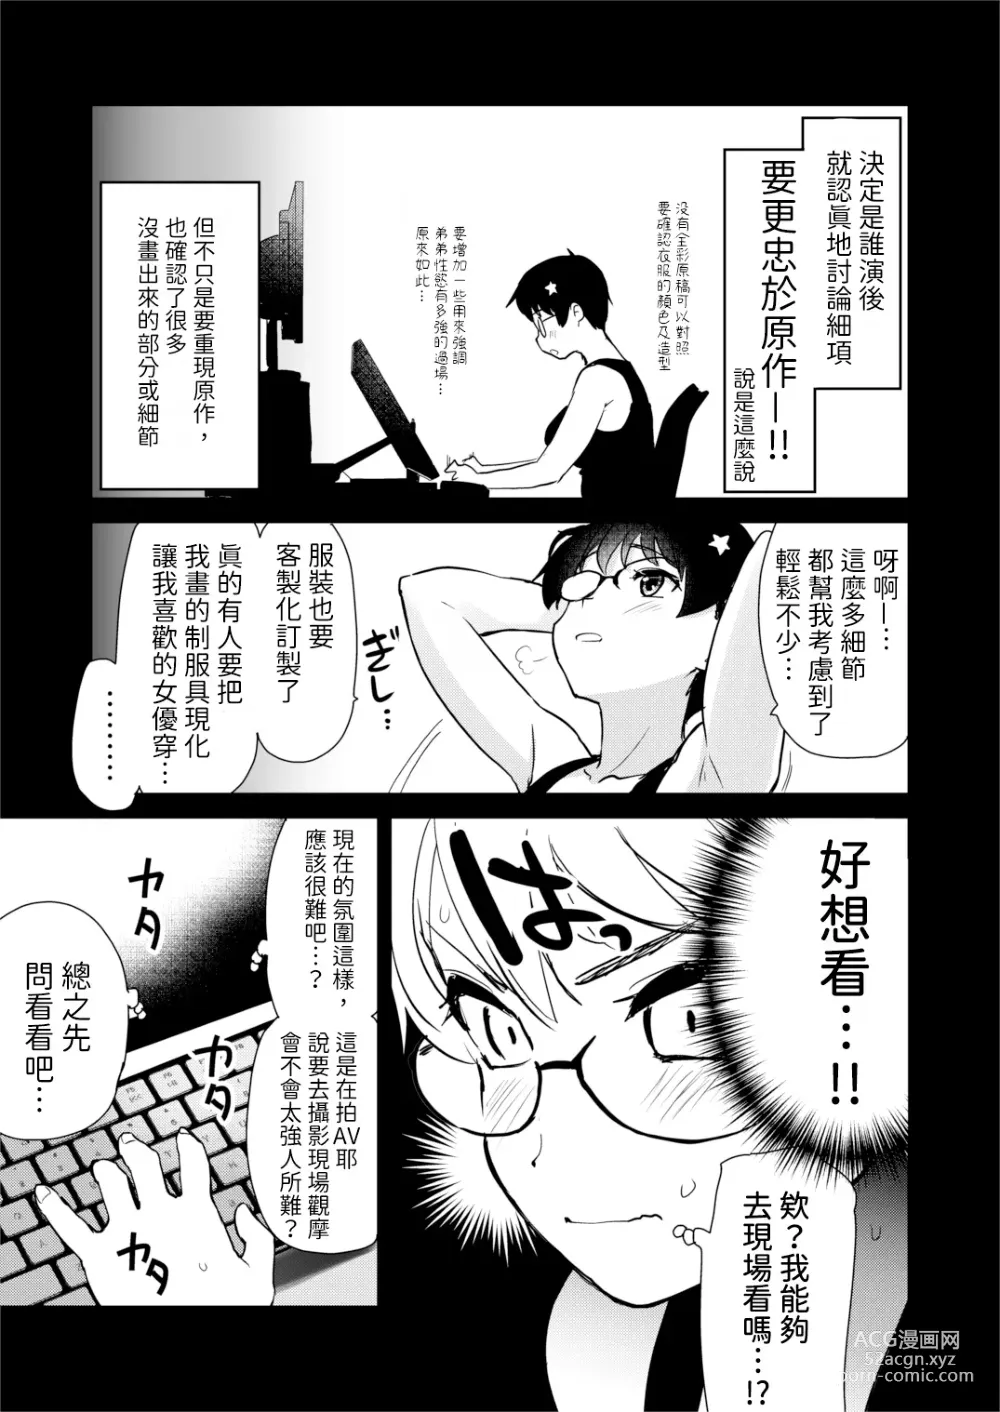 Page 11 of doujinshi 我畫的色情漫畫被AV真人化了!? 因為機會難得所以去拍攝現場觀摩之後的心得感想